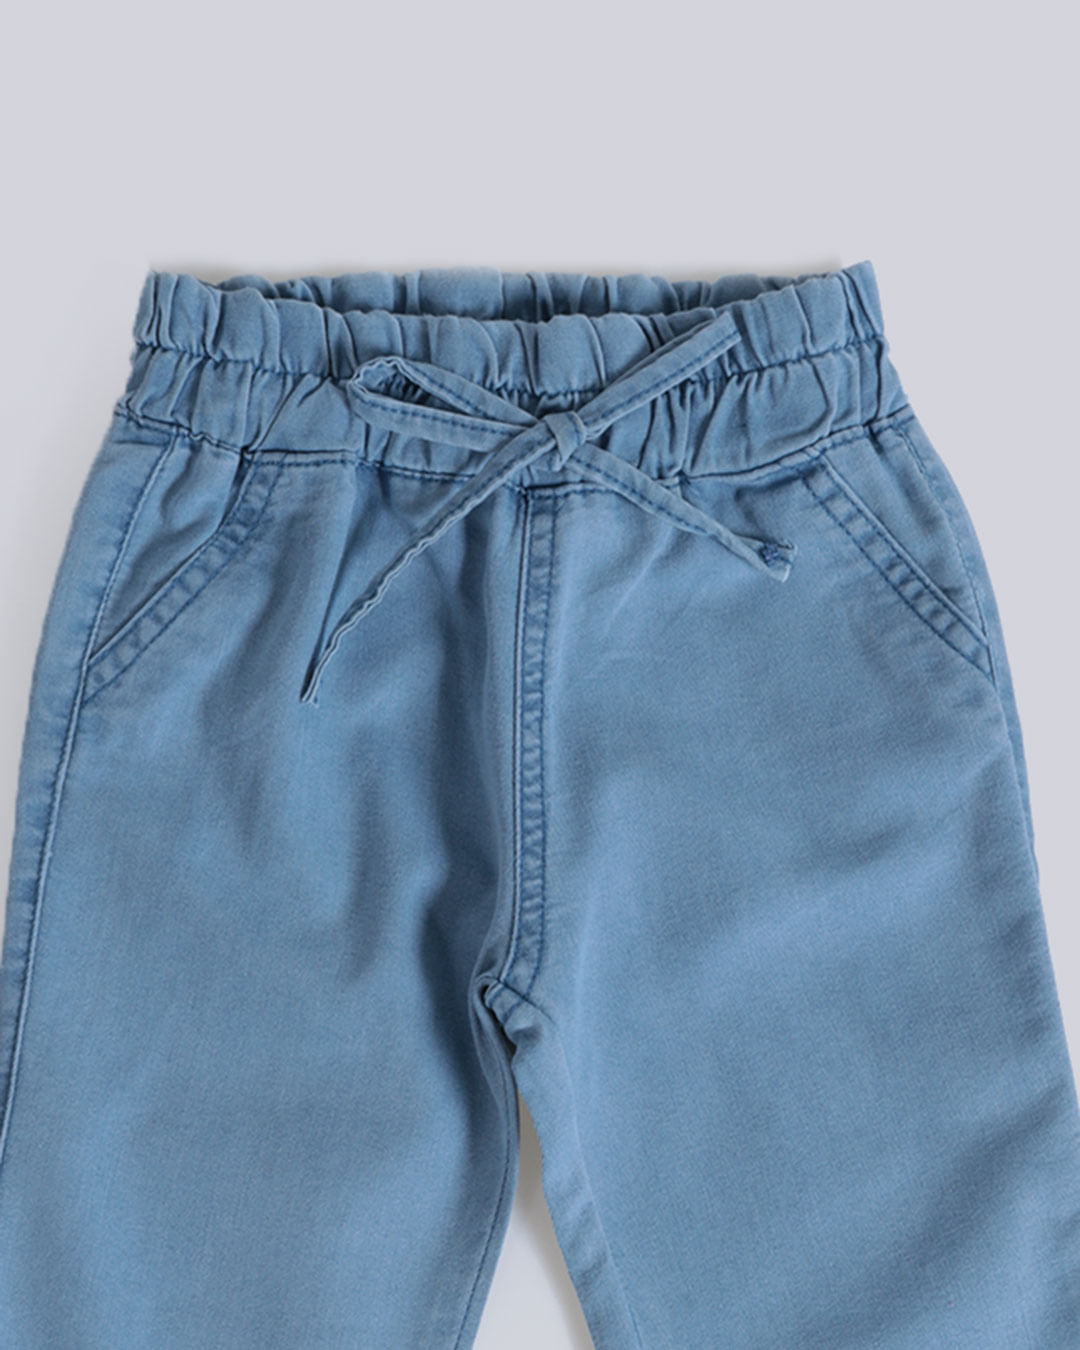 Calca-Jogger-1524-Lc-13---Blue-Jeans-Claro